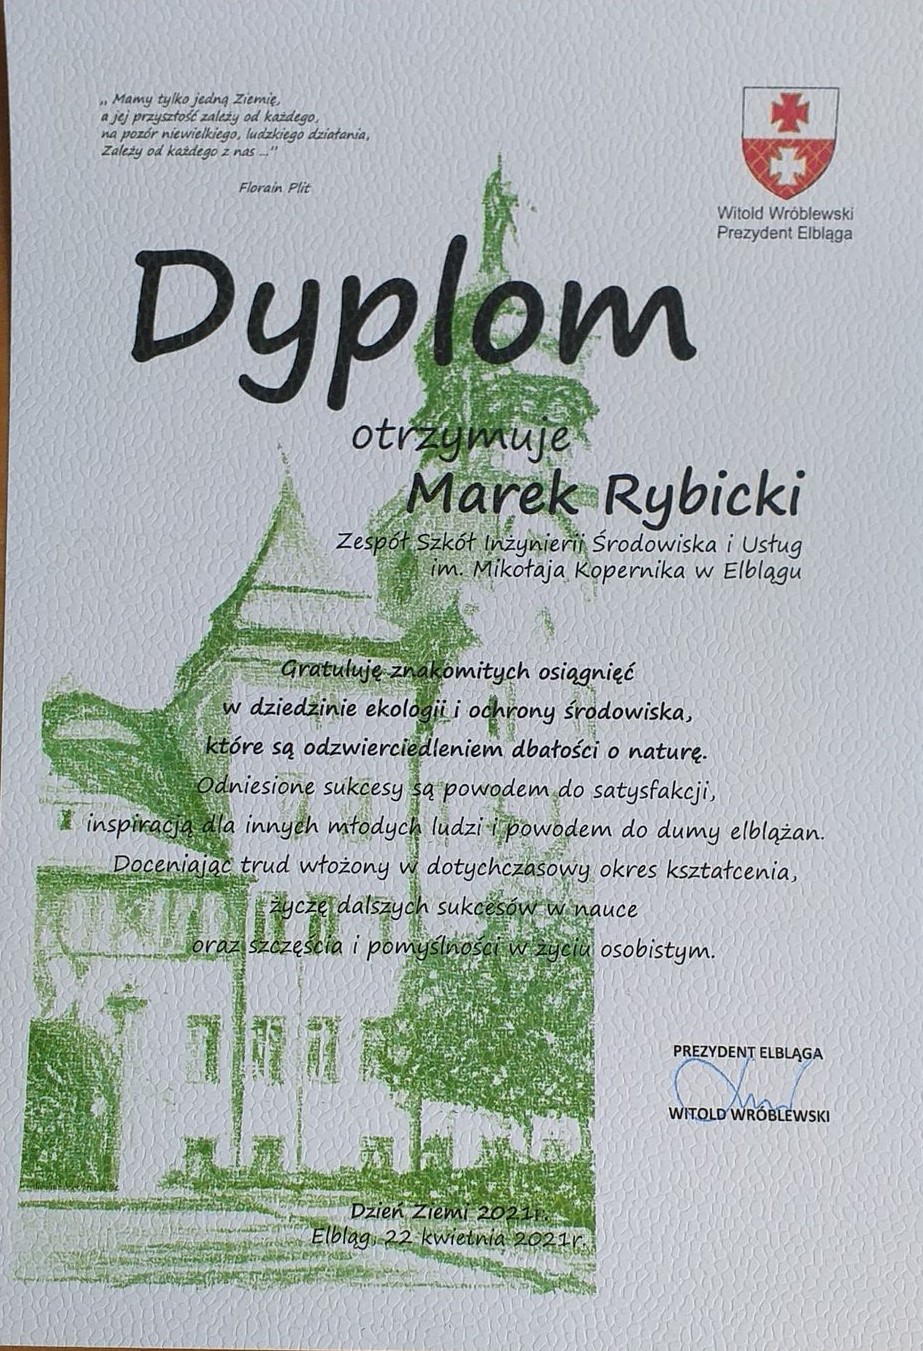 Dyplom Marek Rybicki